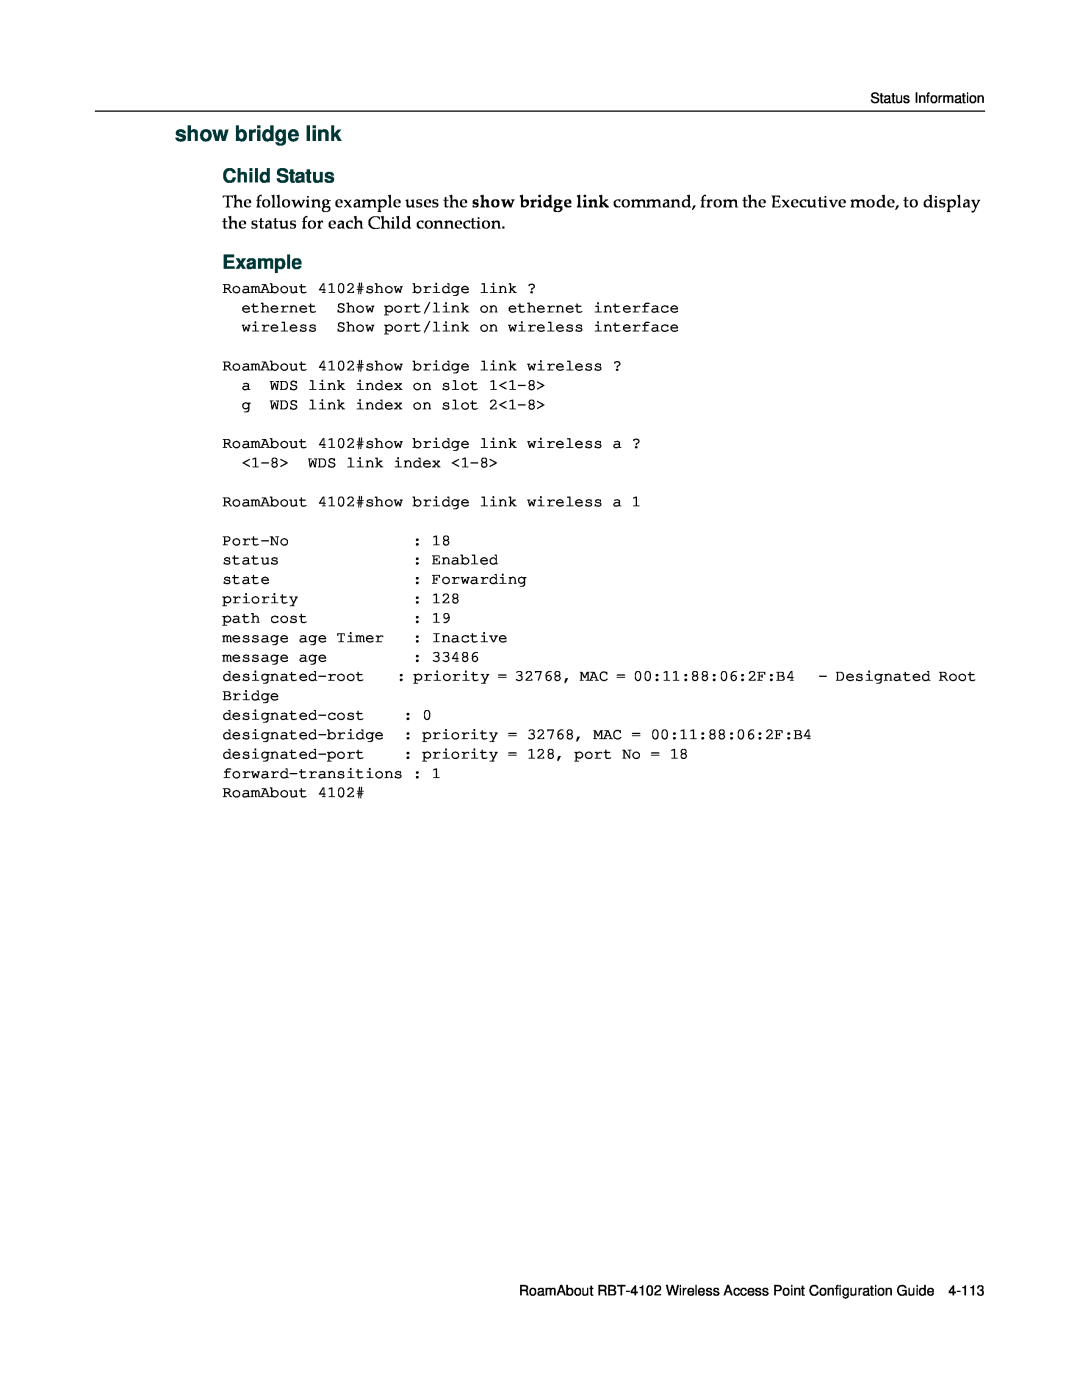 Enterasys Networks RBT-4102 manual show bridge link, Child Status, Example 